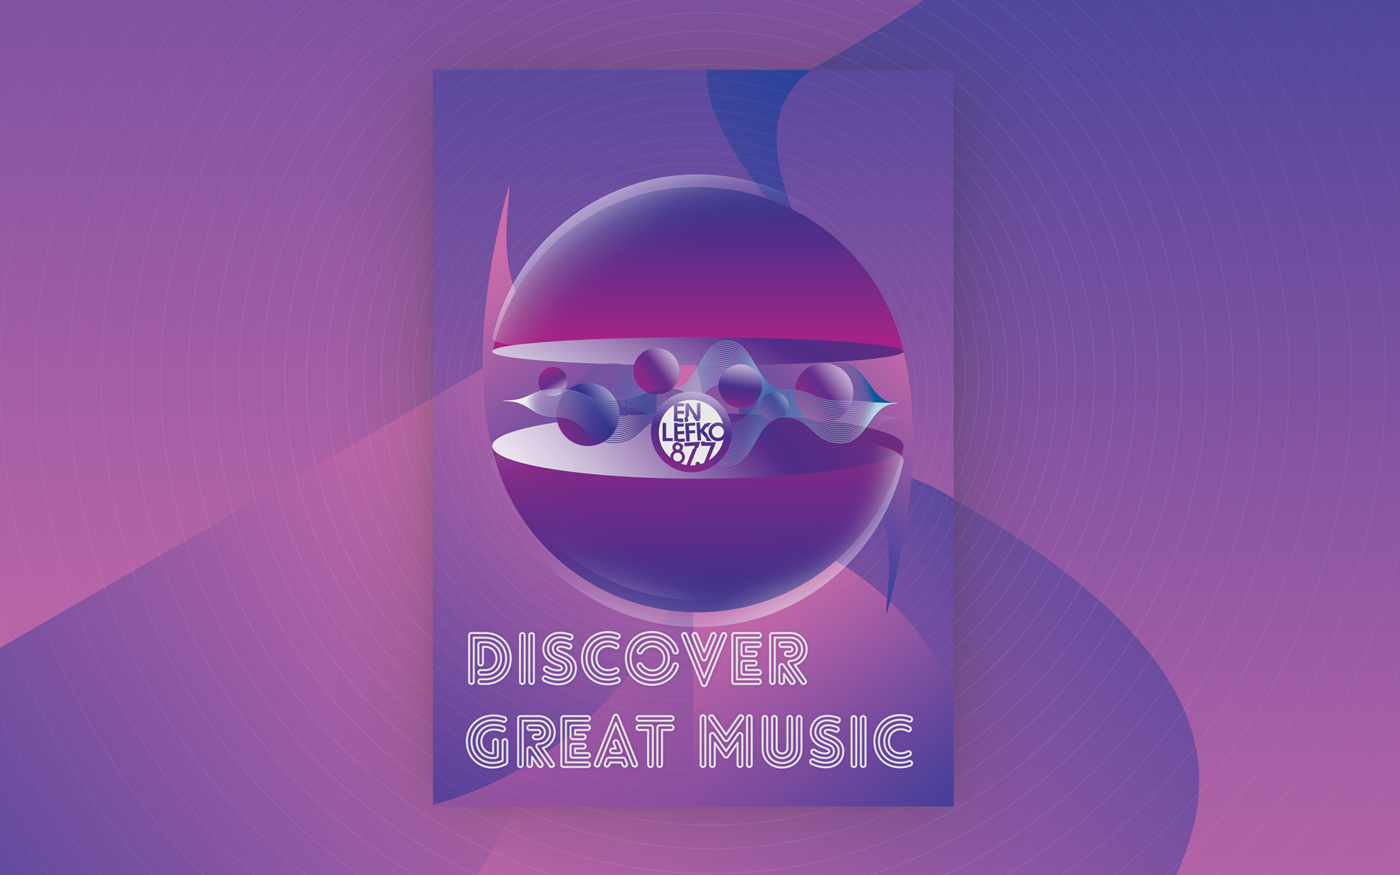 music Radio enlefko posters Space  electric vivid gradients universe festival